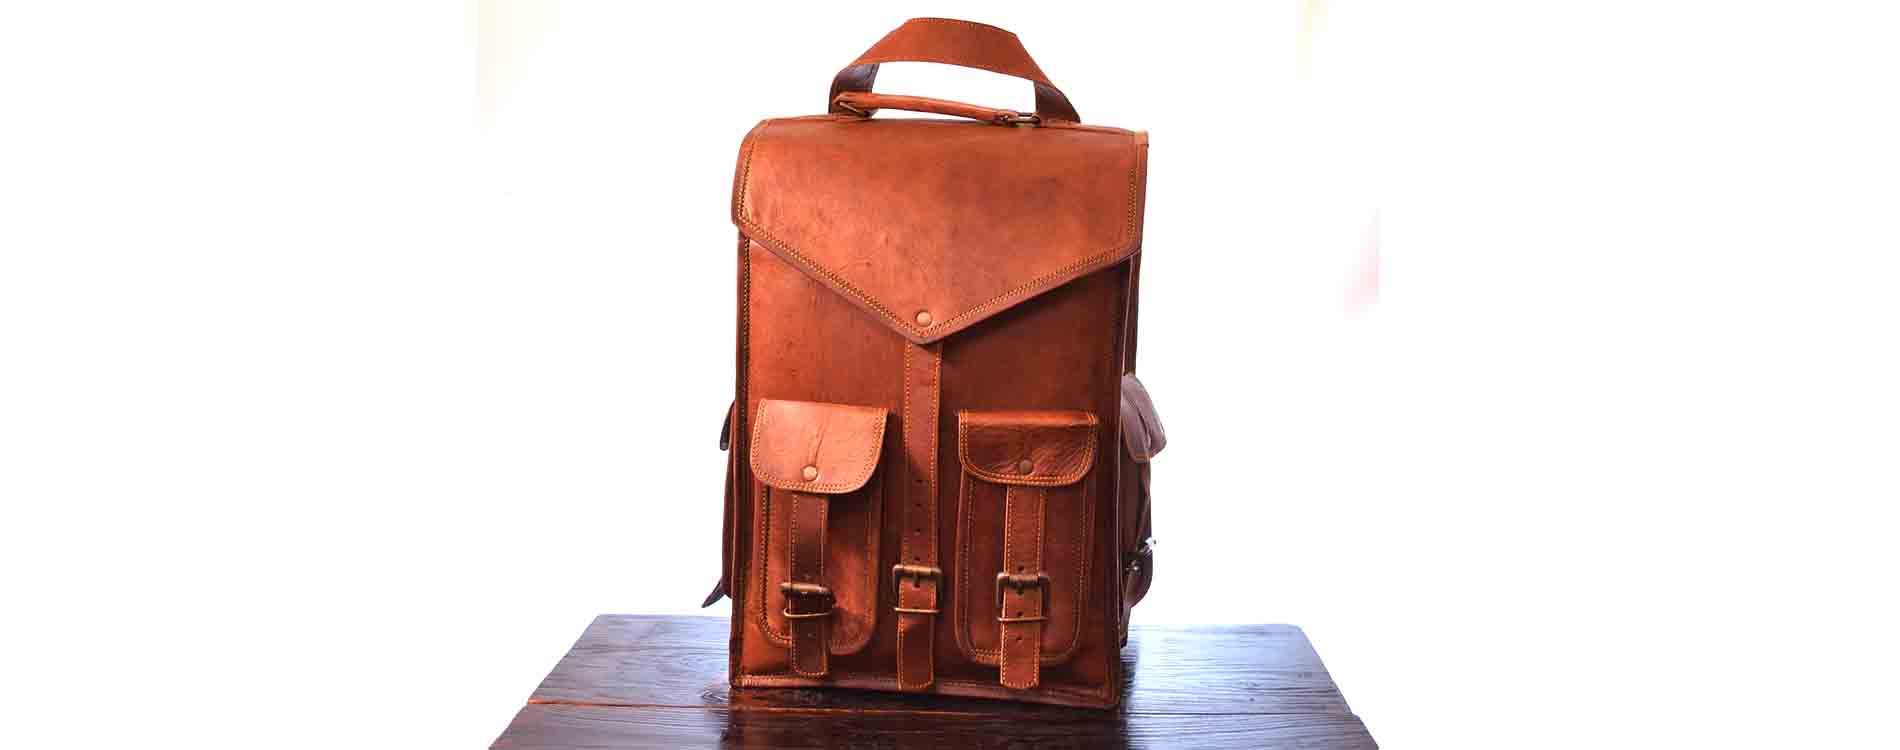 Rhinoland Unisex Leather Laptop Bag Trekking Bag Hiking Backpack College School Office Biker Bag